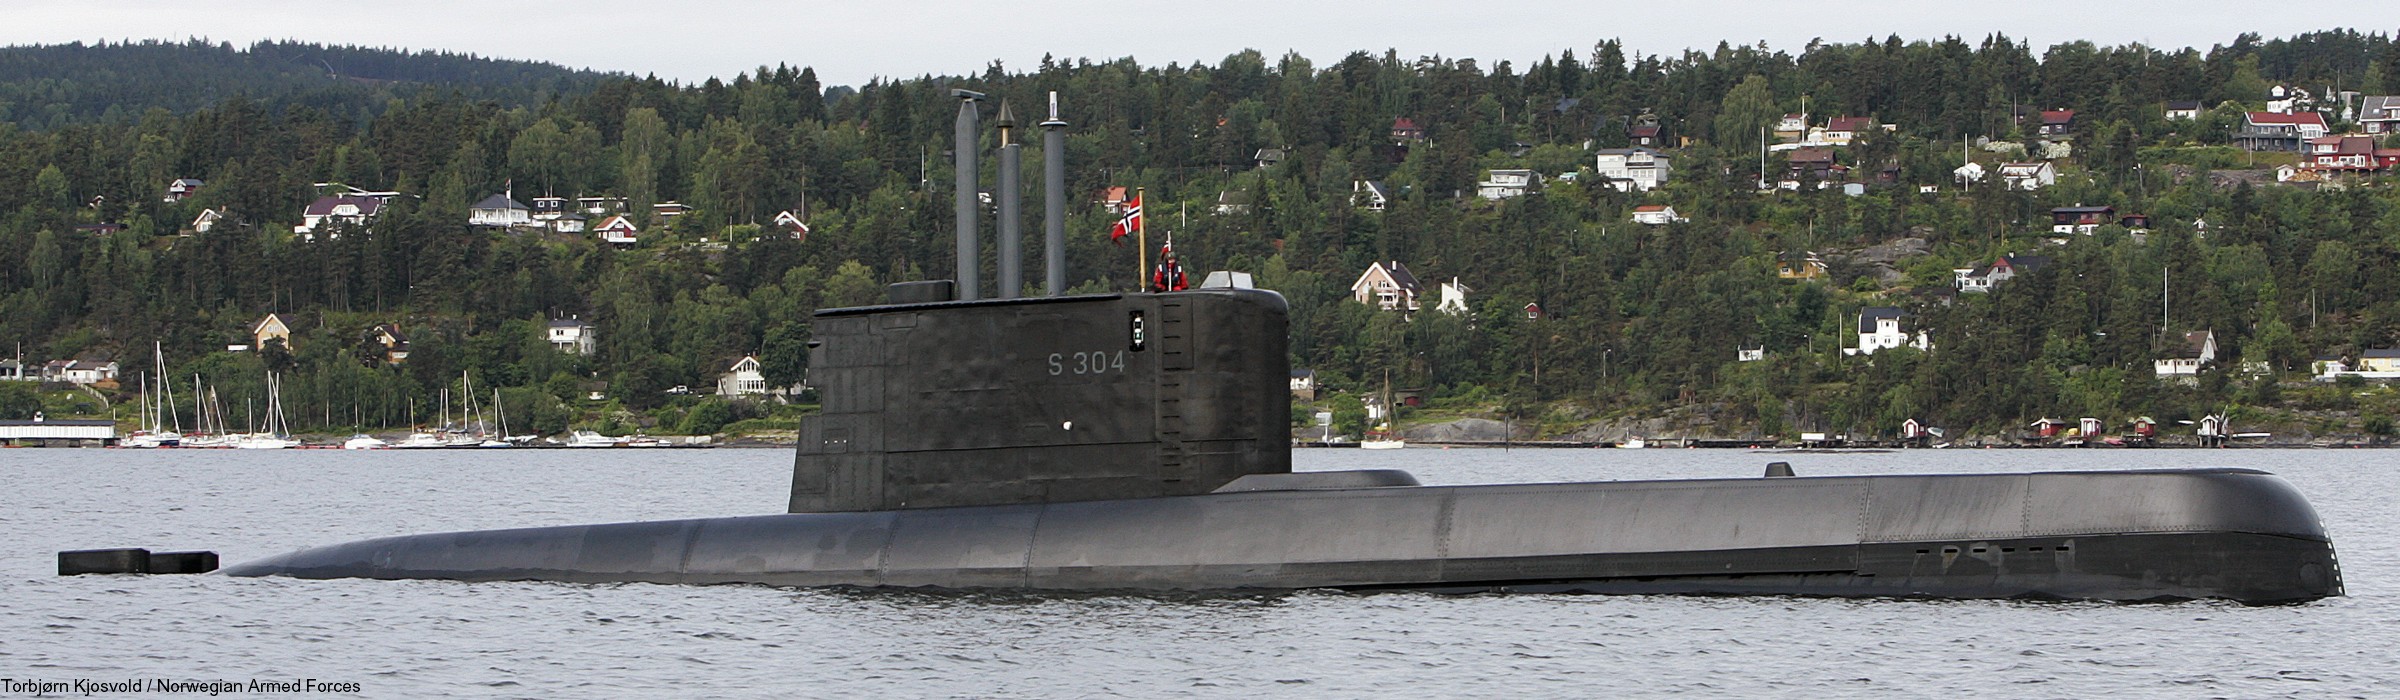 s-304 hnoms knm uthaug ula class submarine type 210 attack ssk undervannsbåt royal norwegian navy sjøforsvaret 07